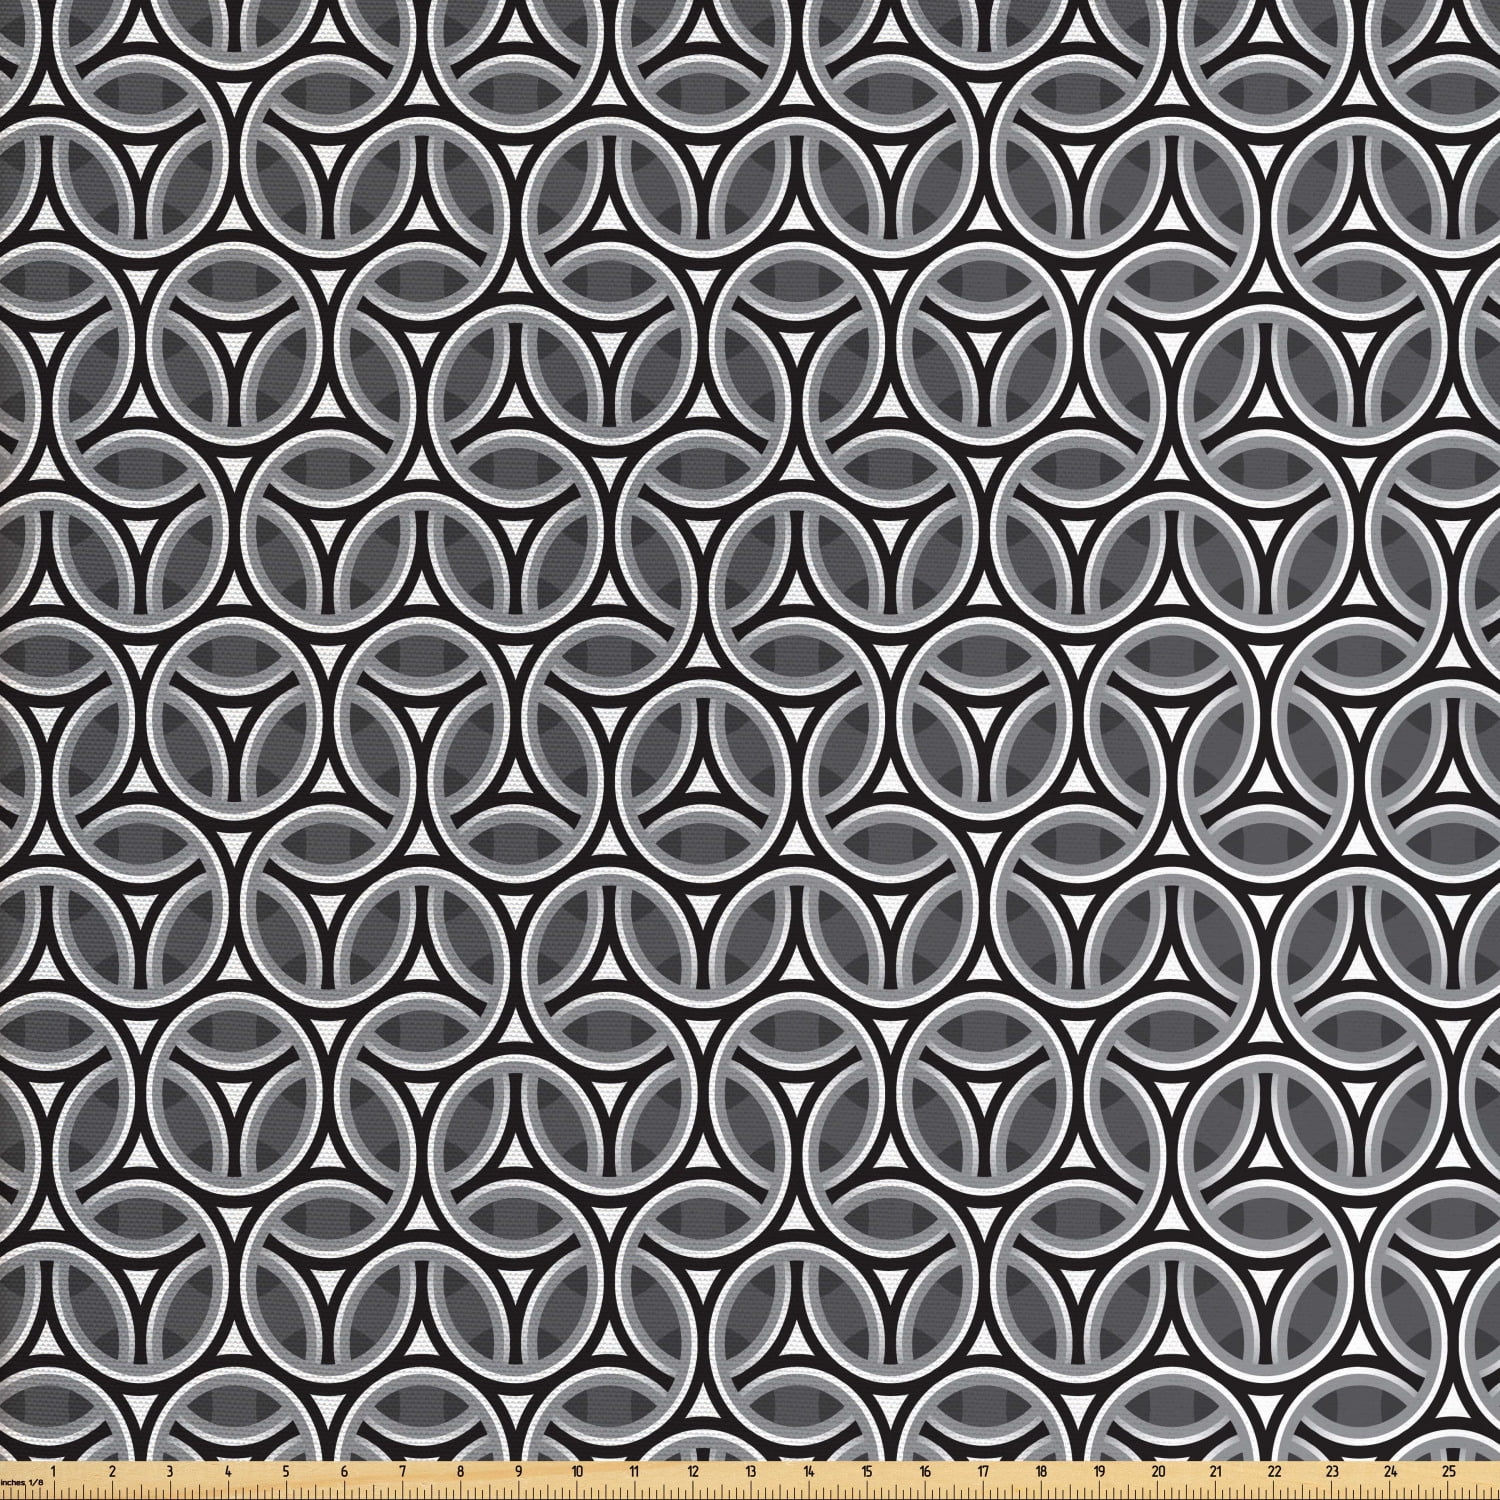 Dining Room Kitchen Rectangular Runner 16 X 72 Grey Charcoal Grey Ambesonne Geometric Table Runner Hand Drawn Greyscale Illustration of Rhombuses Diagonal Herringbone Lines